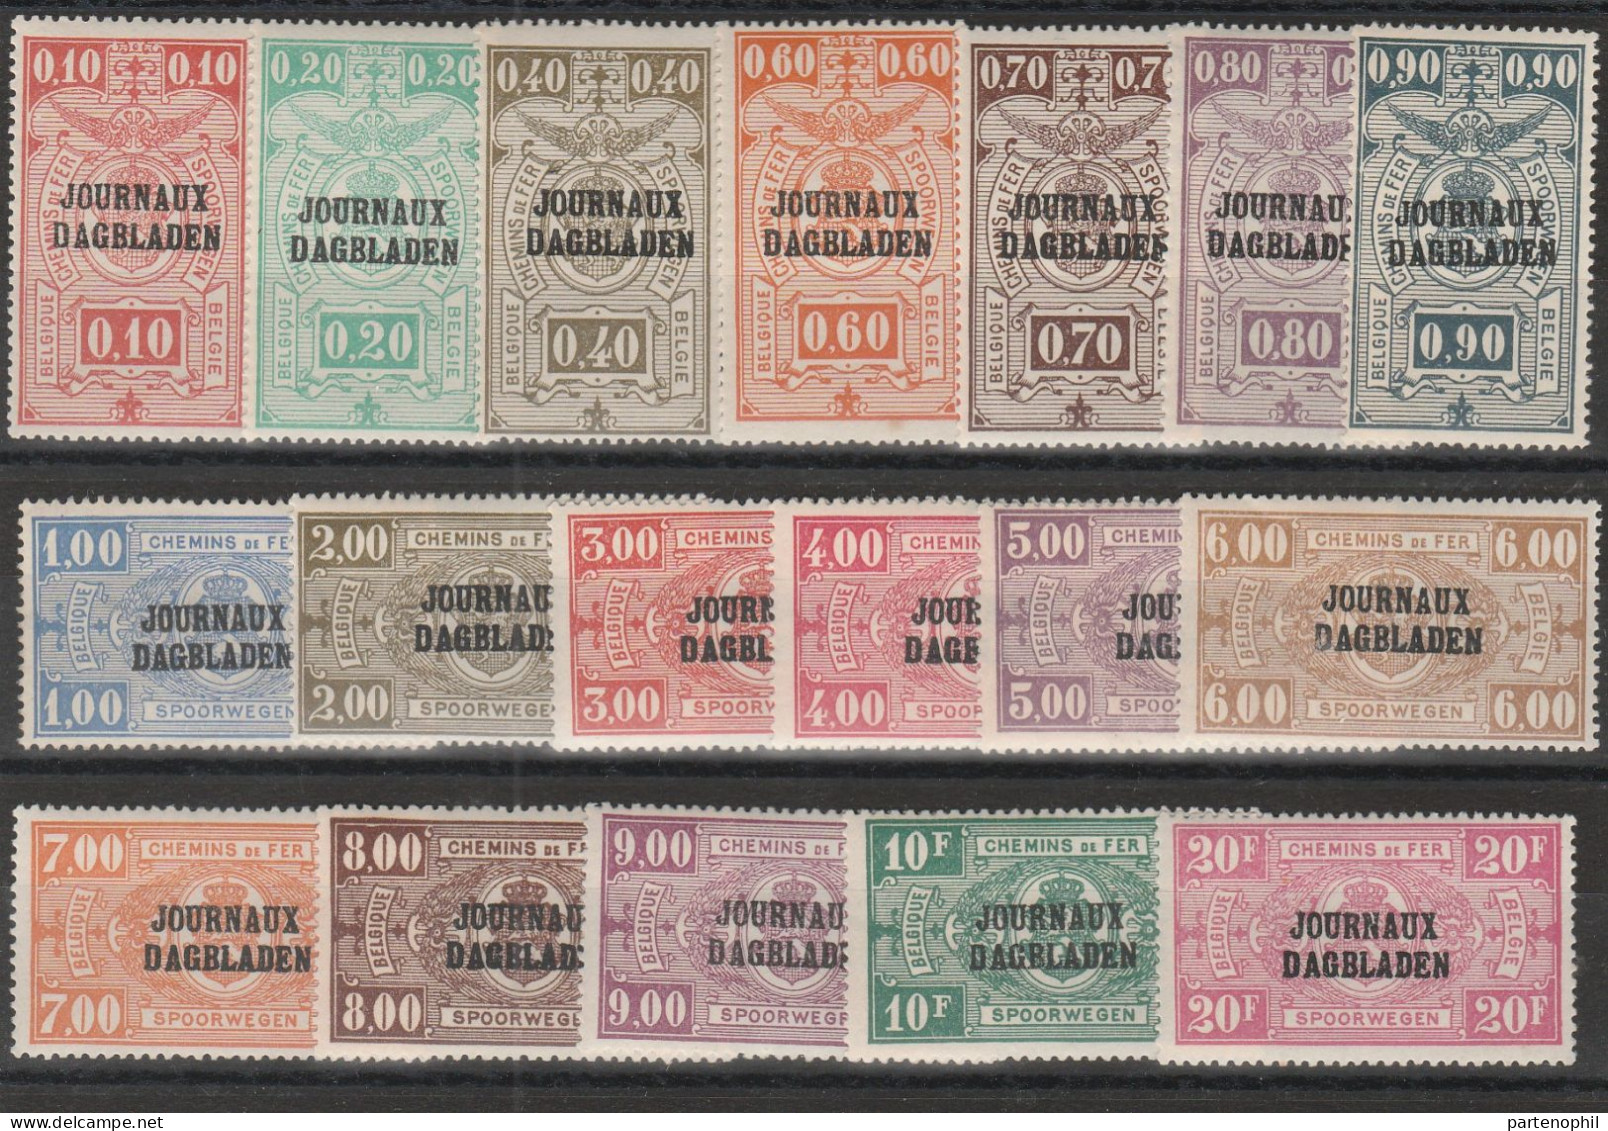 442 Belgio Belgium 1928-9 - Francobolli Per Giornali - Pacchi Postali Soprastampati N. 19/36. MH - Ungebraucht